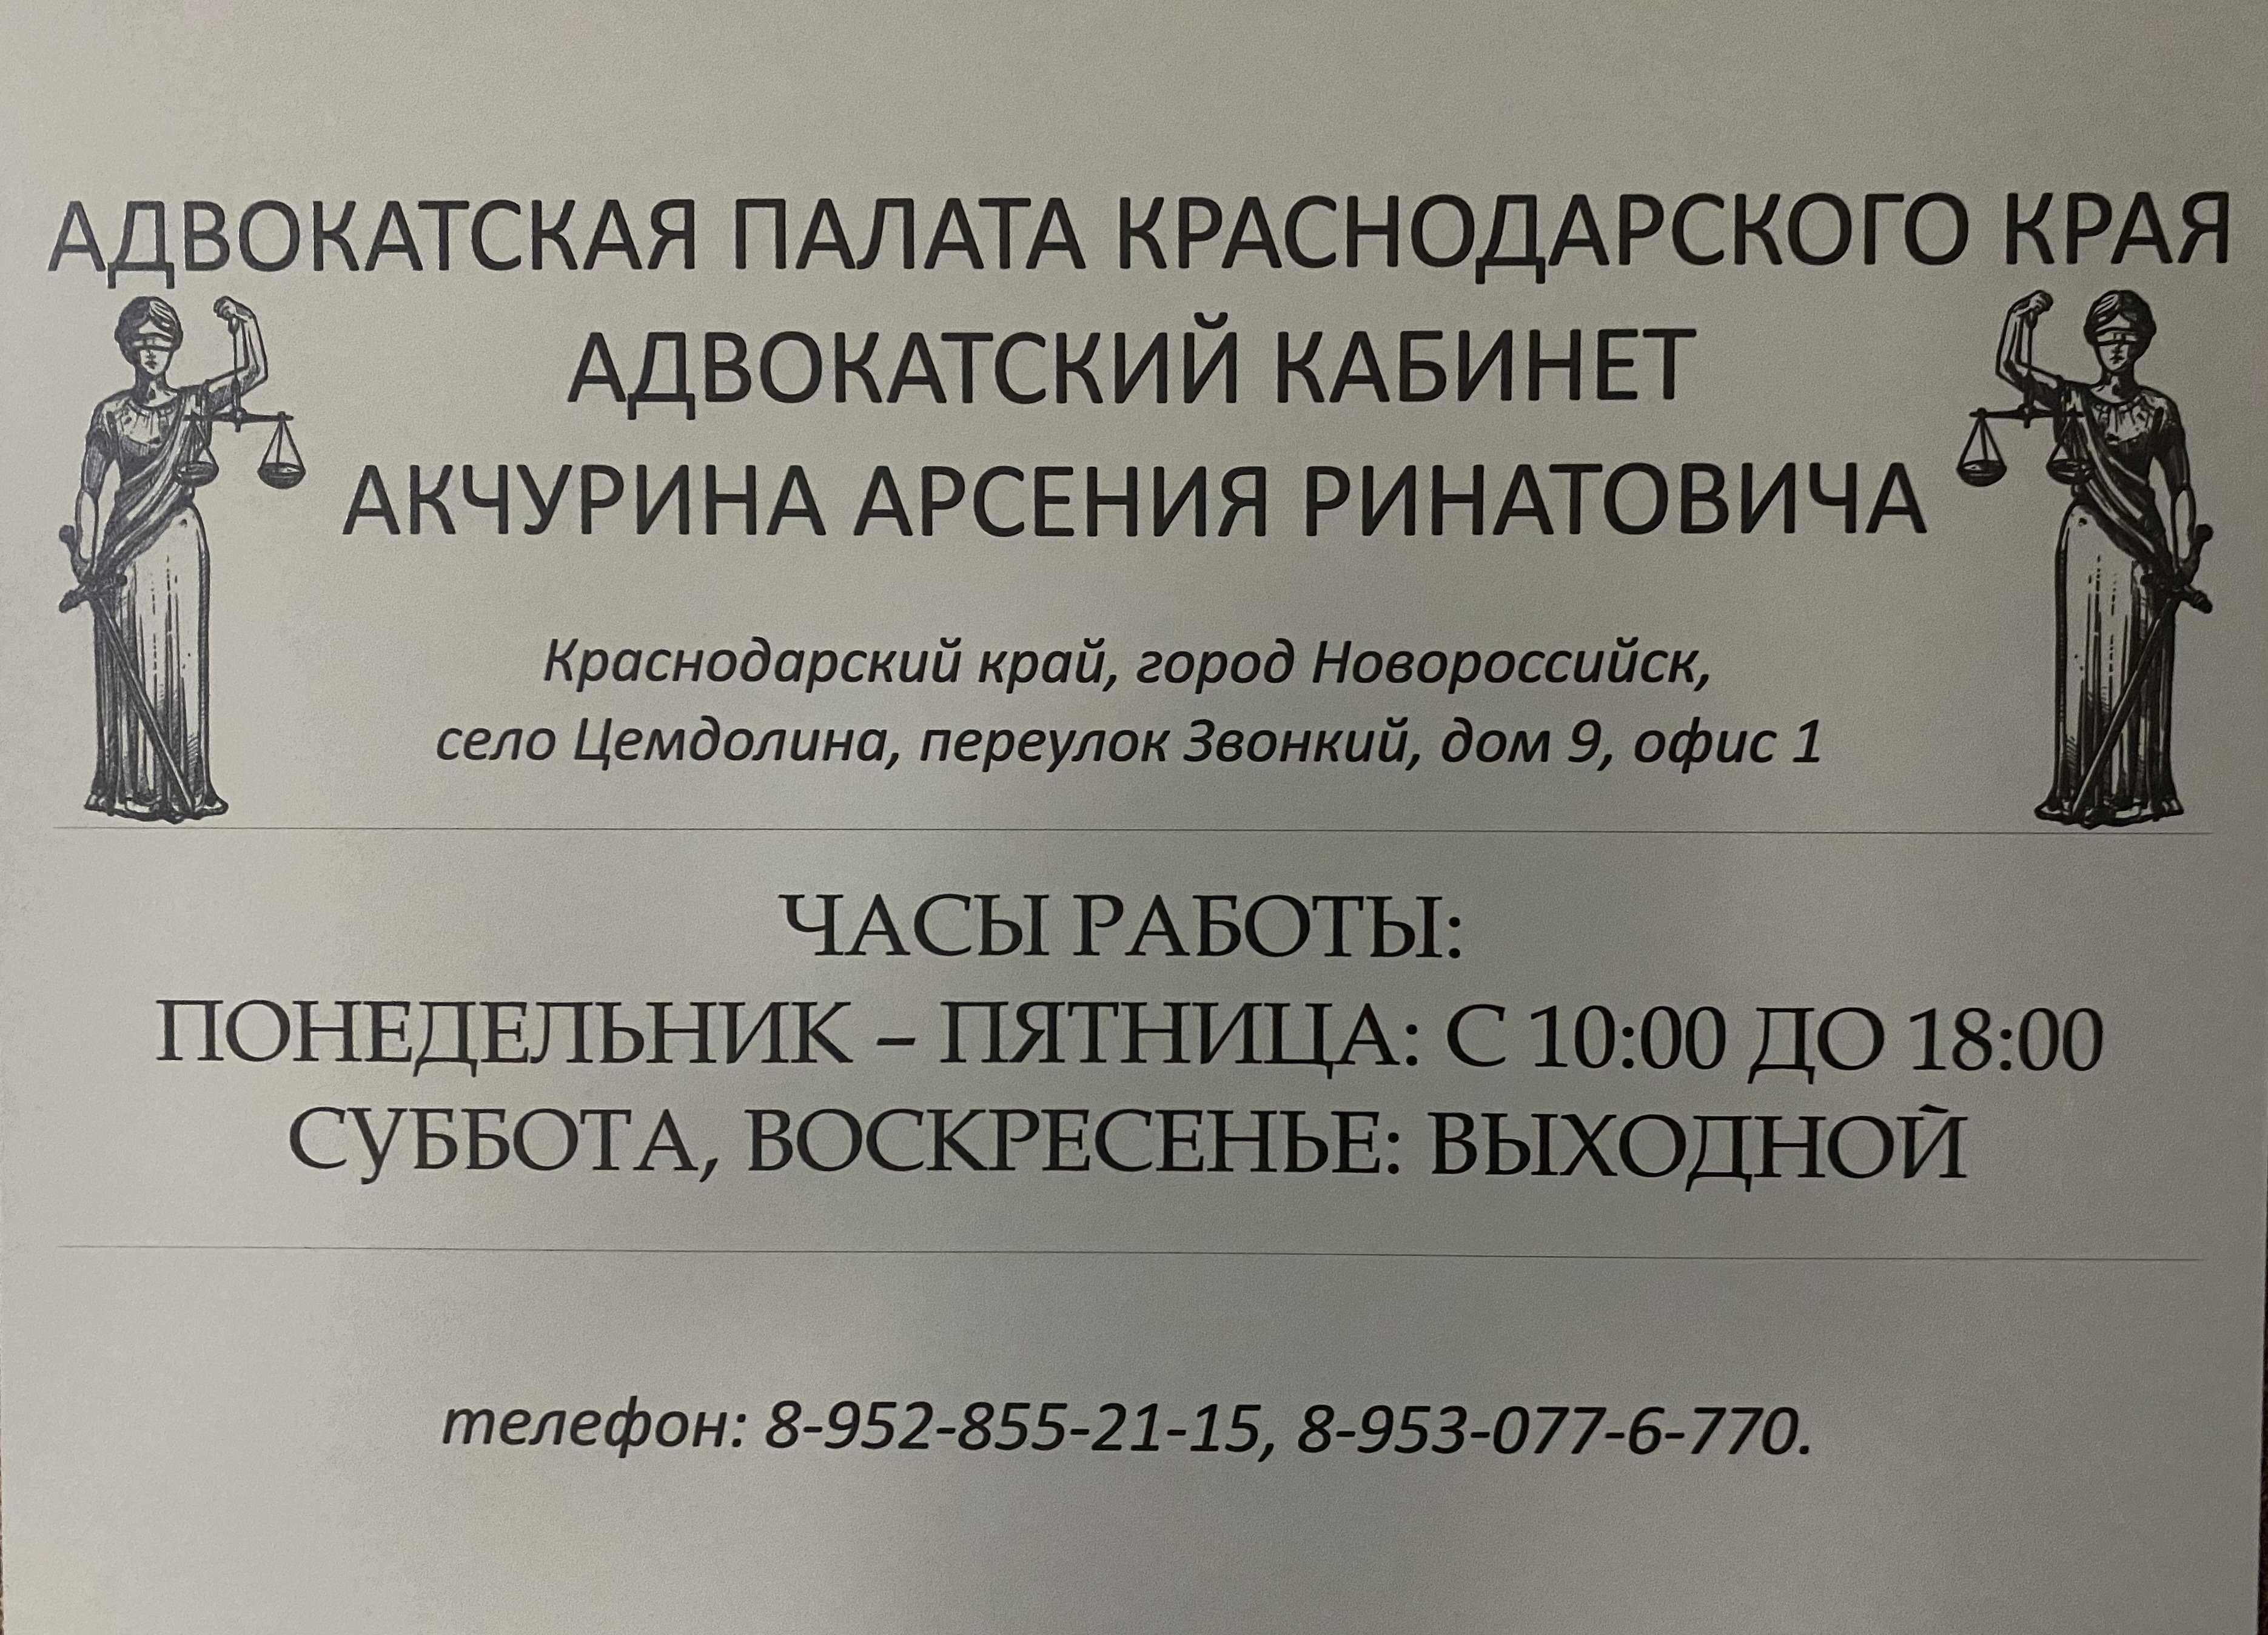 Адвокатский кабинет Акчурина А.Р. фото 1